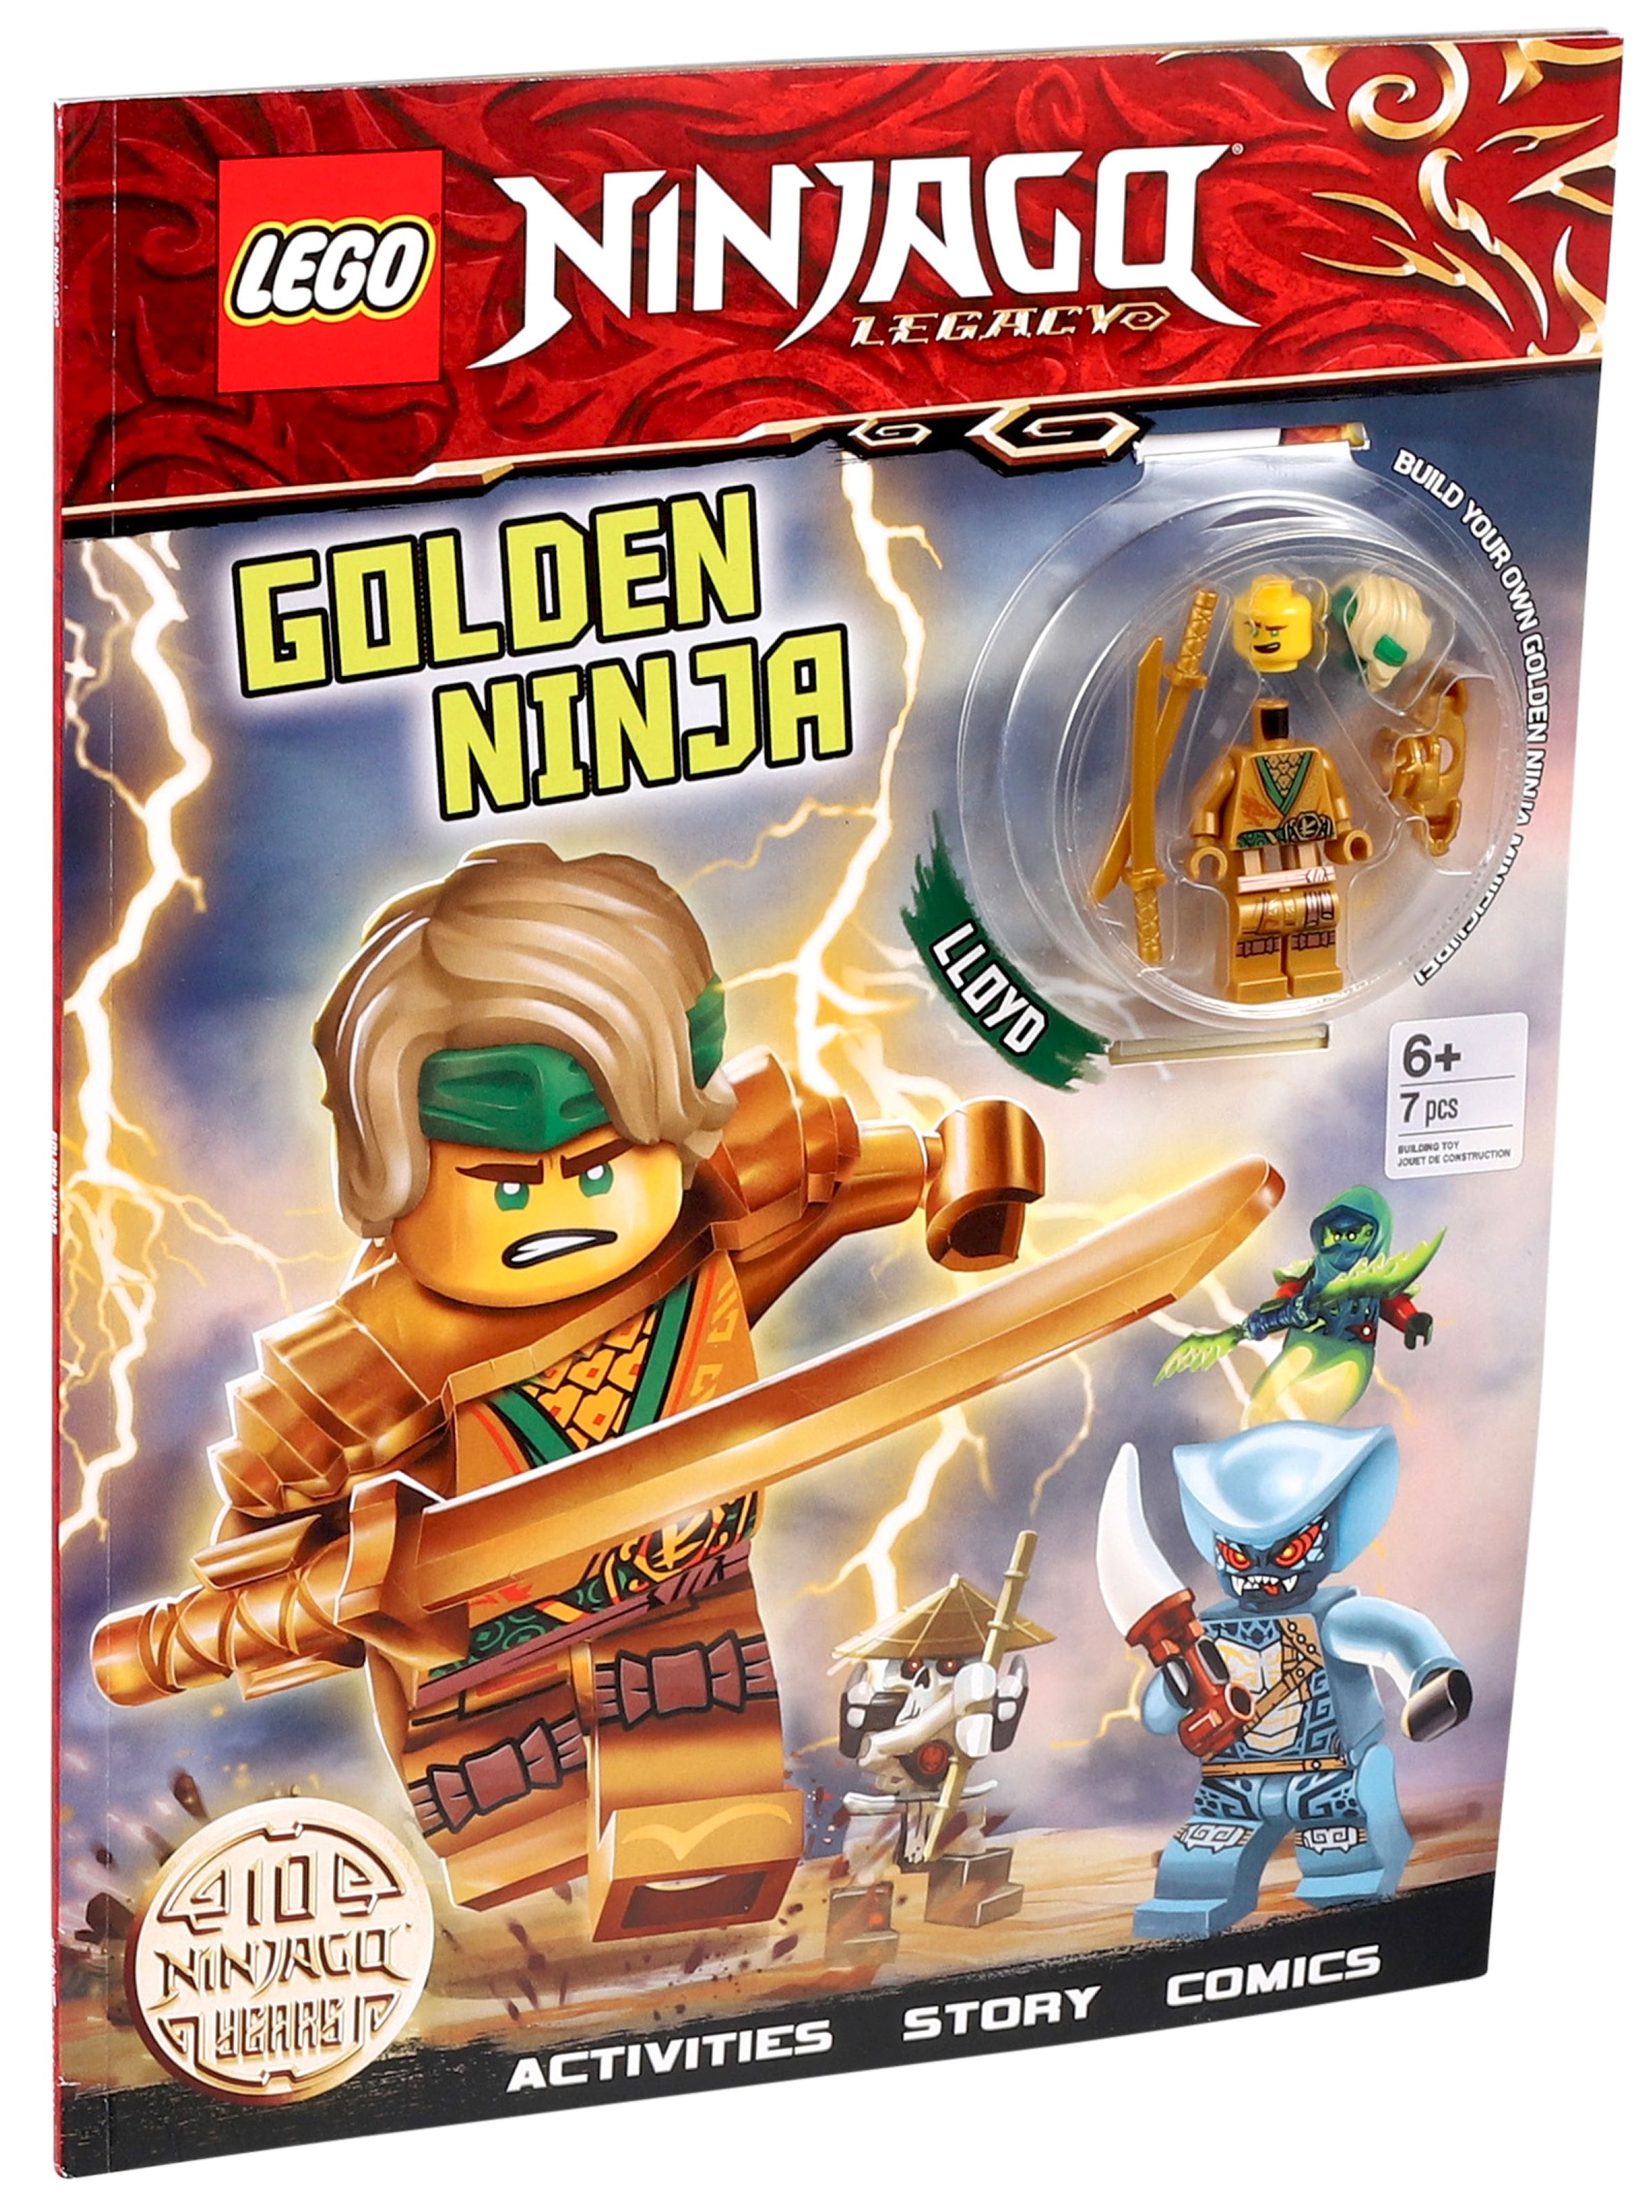 Golden Ninja 5007857, NINJAGO®